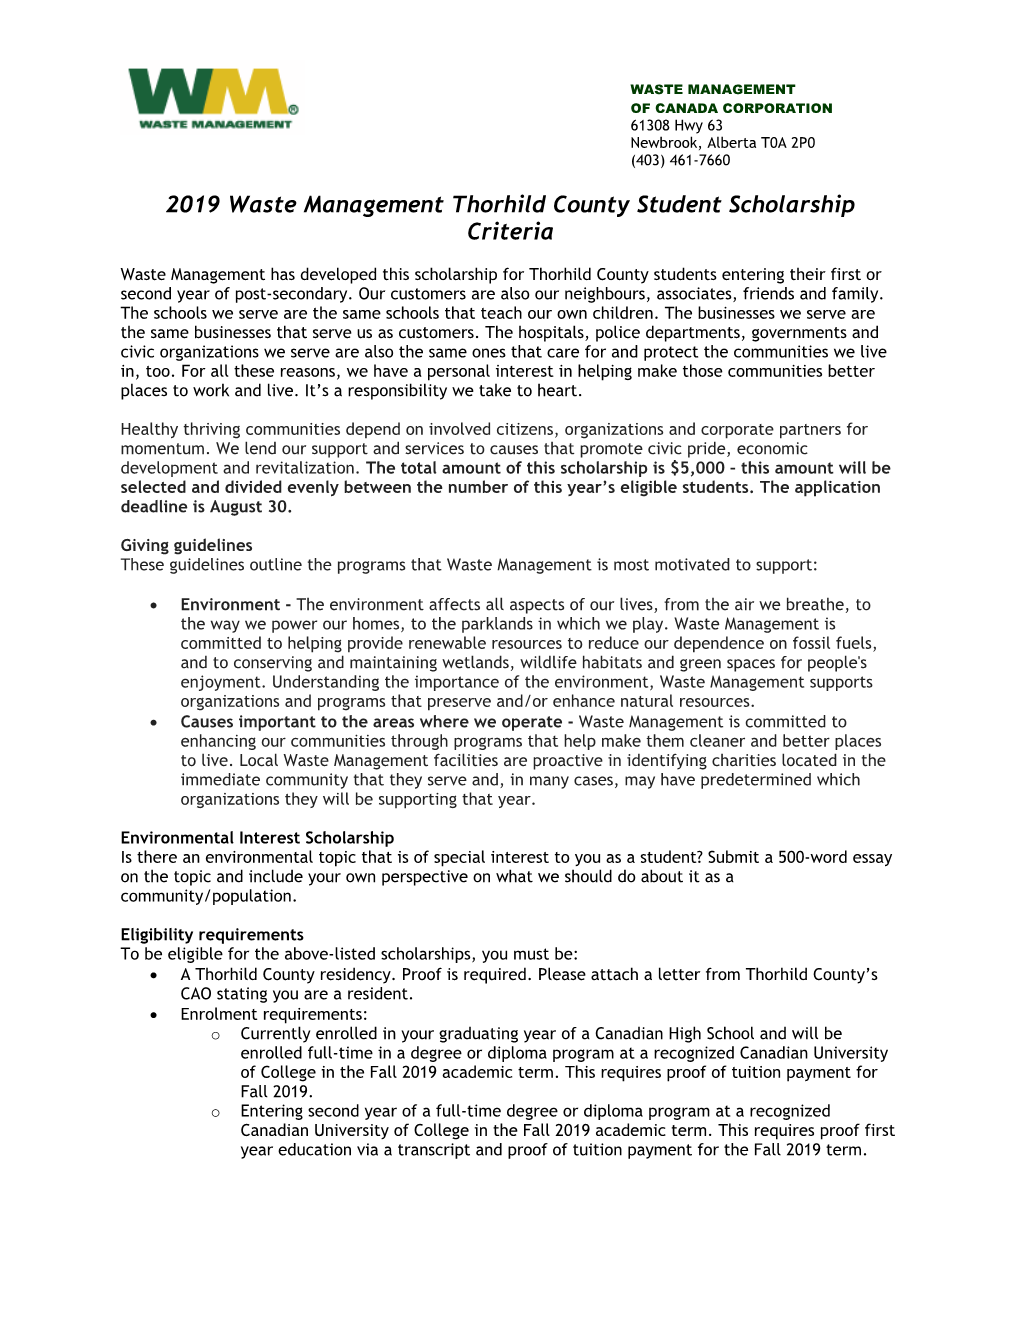 2019 Waste Management Thorhild County Student Scholarship Criteria